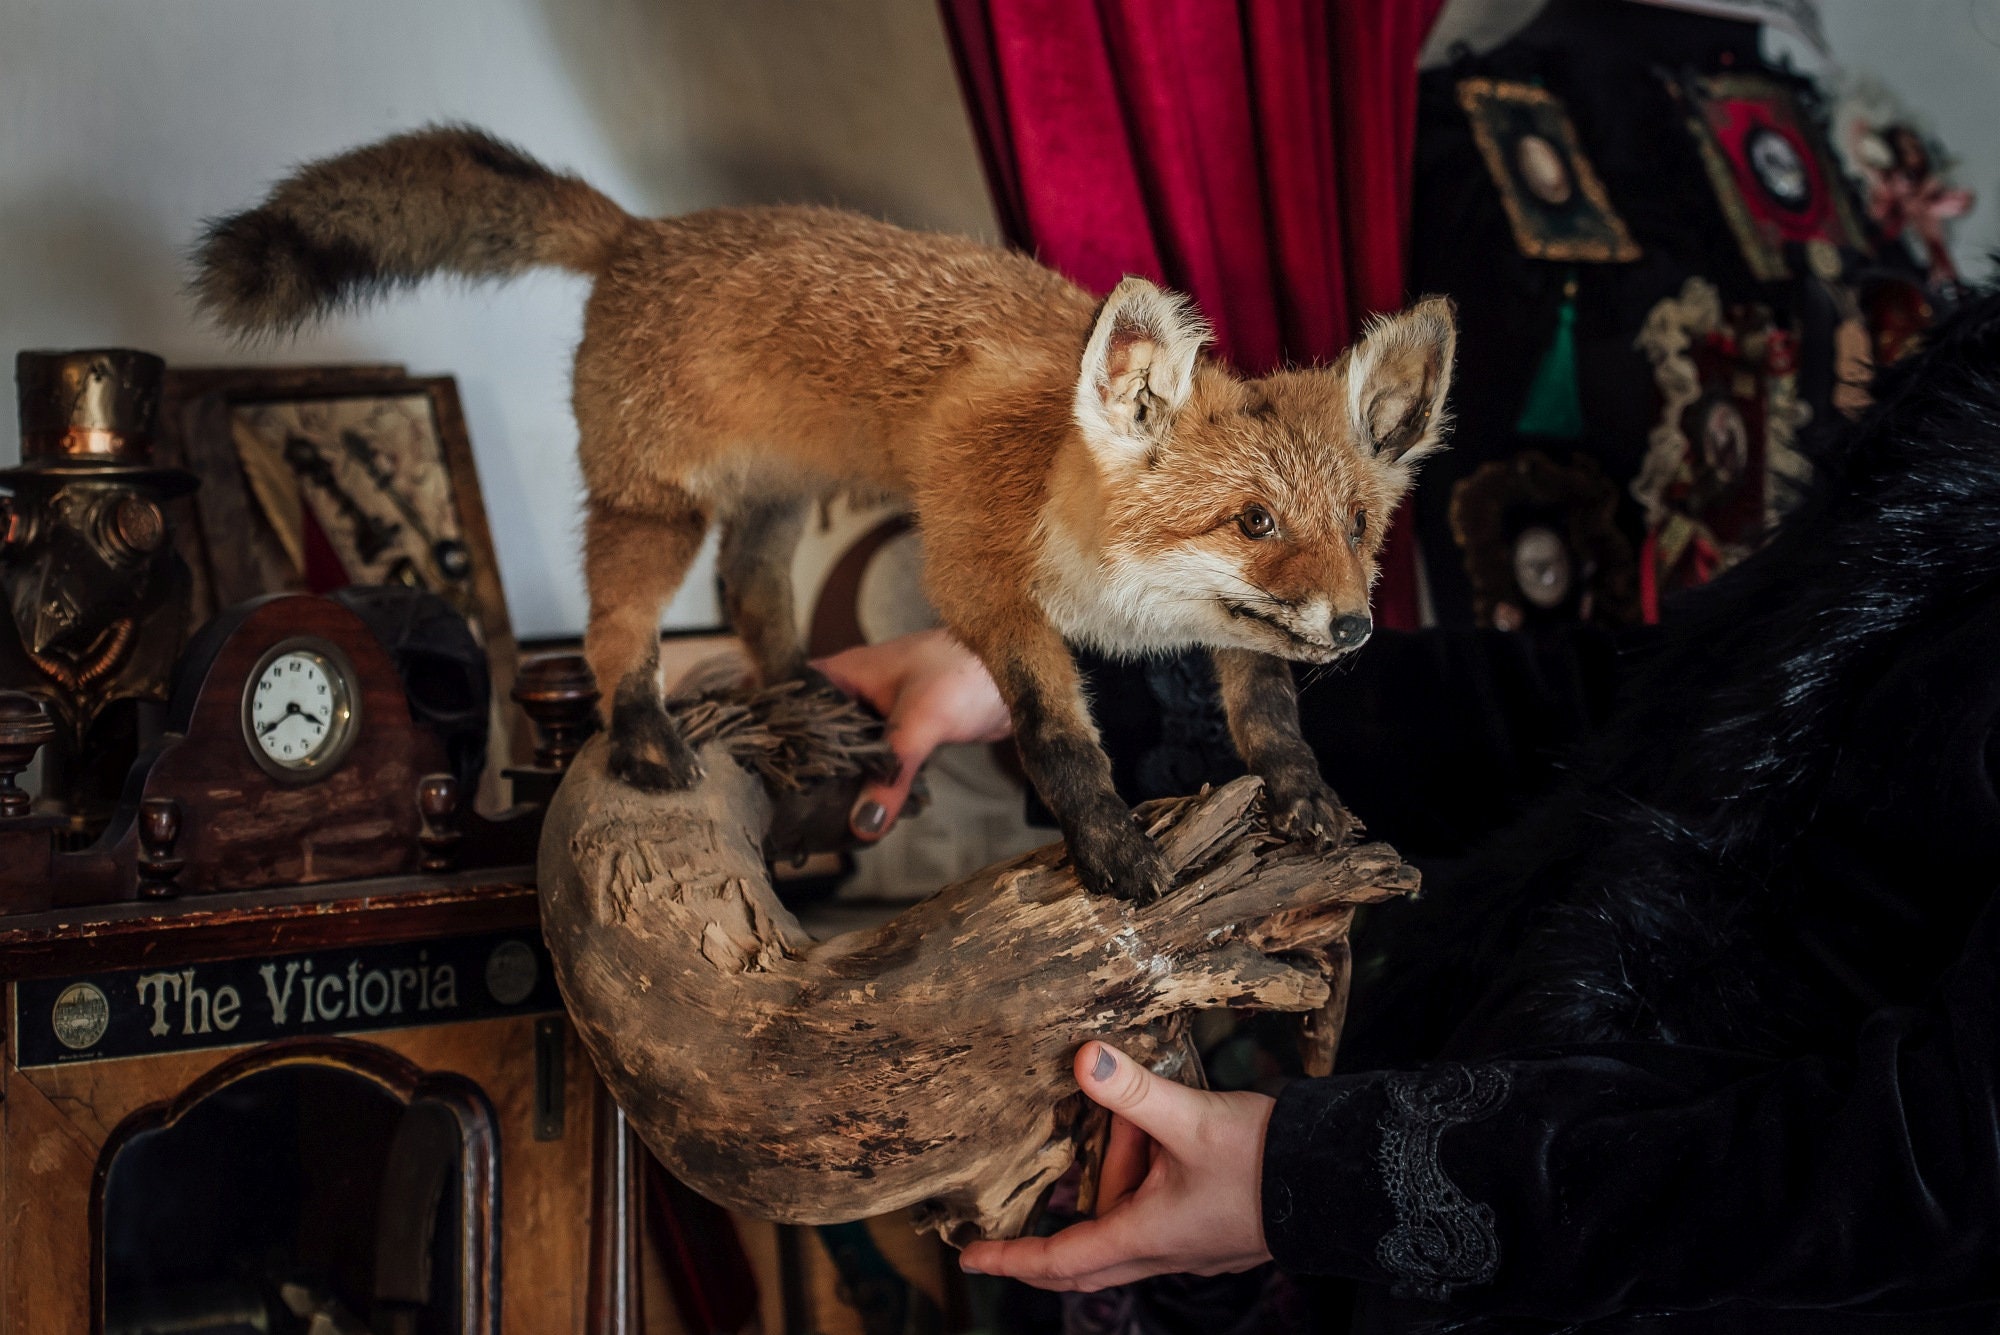 naga tails the fox